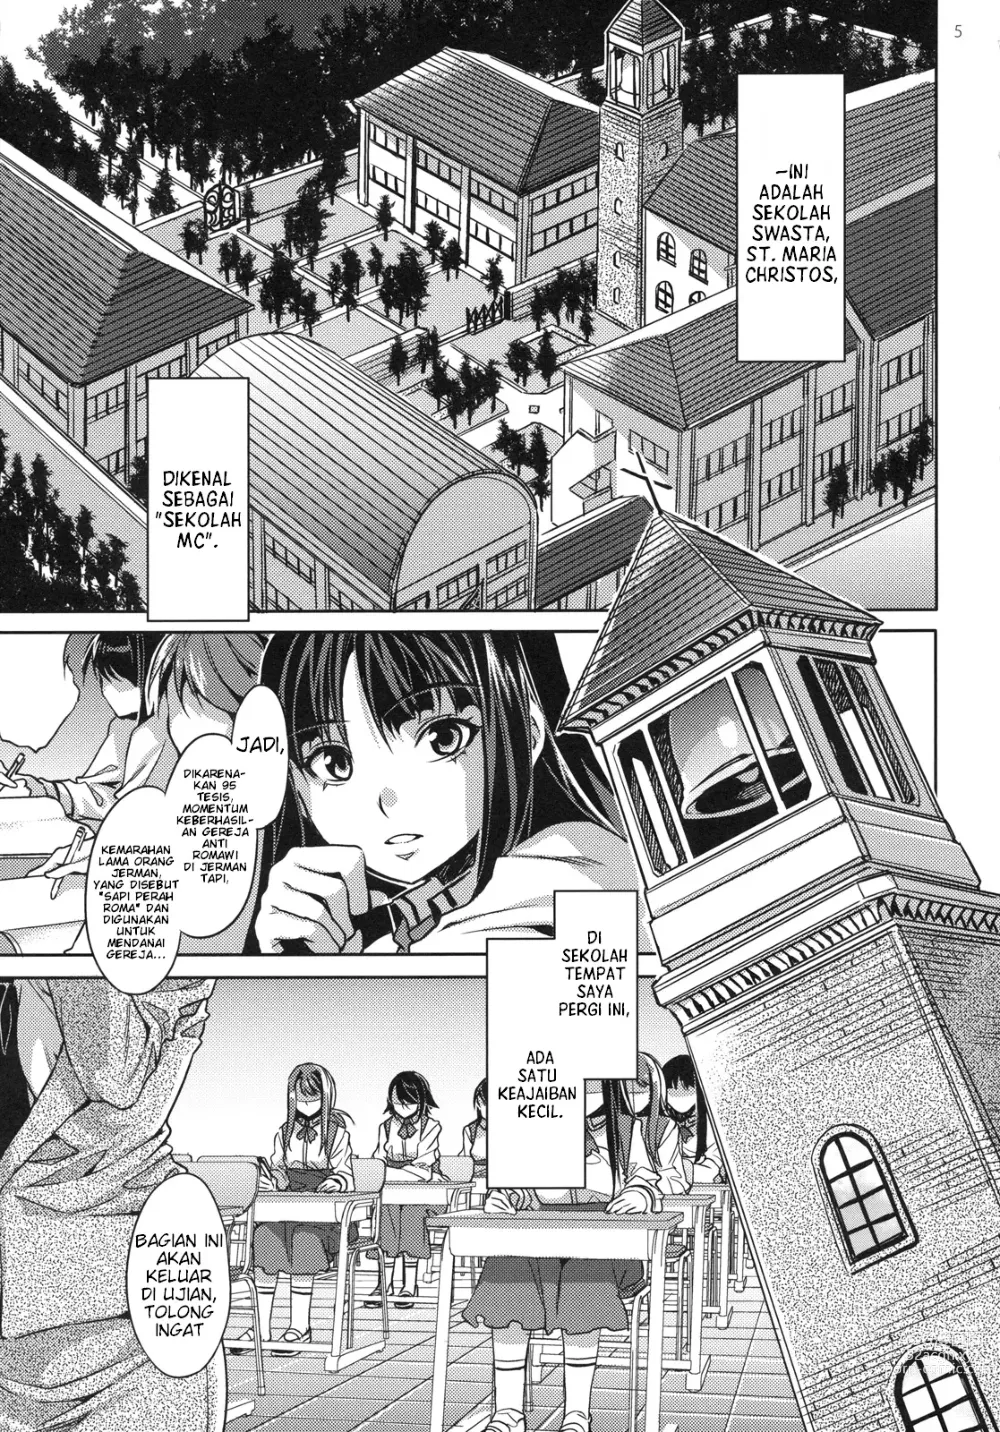 Page 4 of doujinshi Sekolah MC Periode Pertama